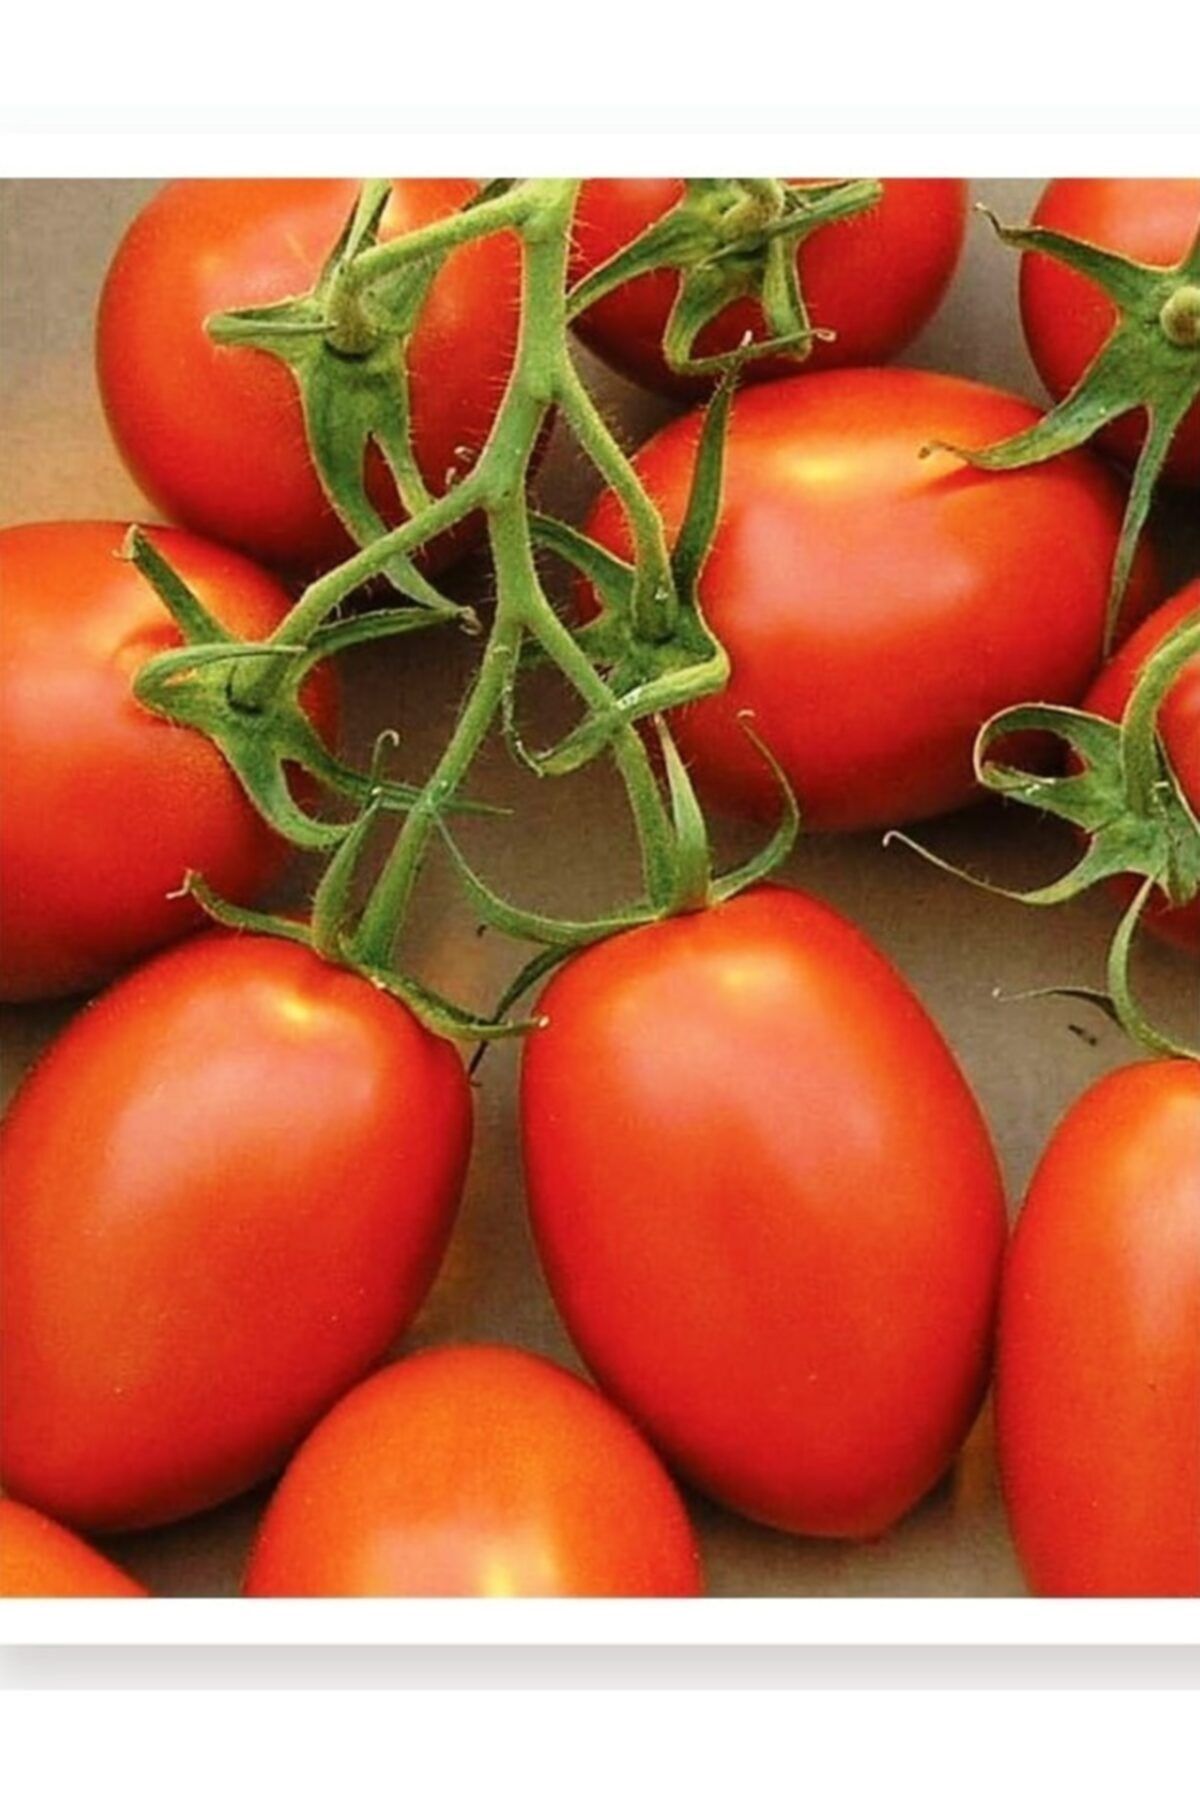 томаты торбей фото